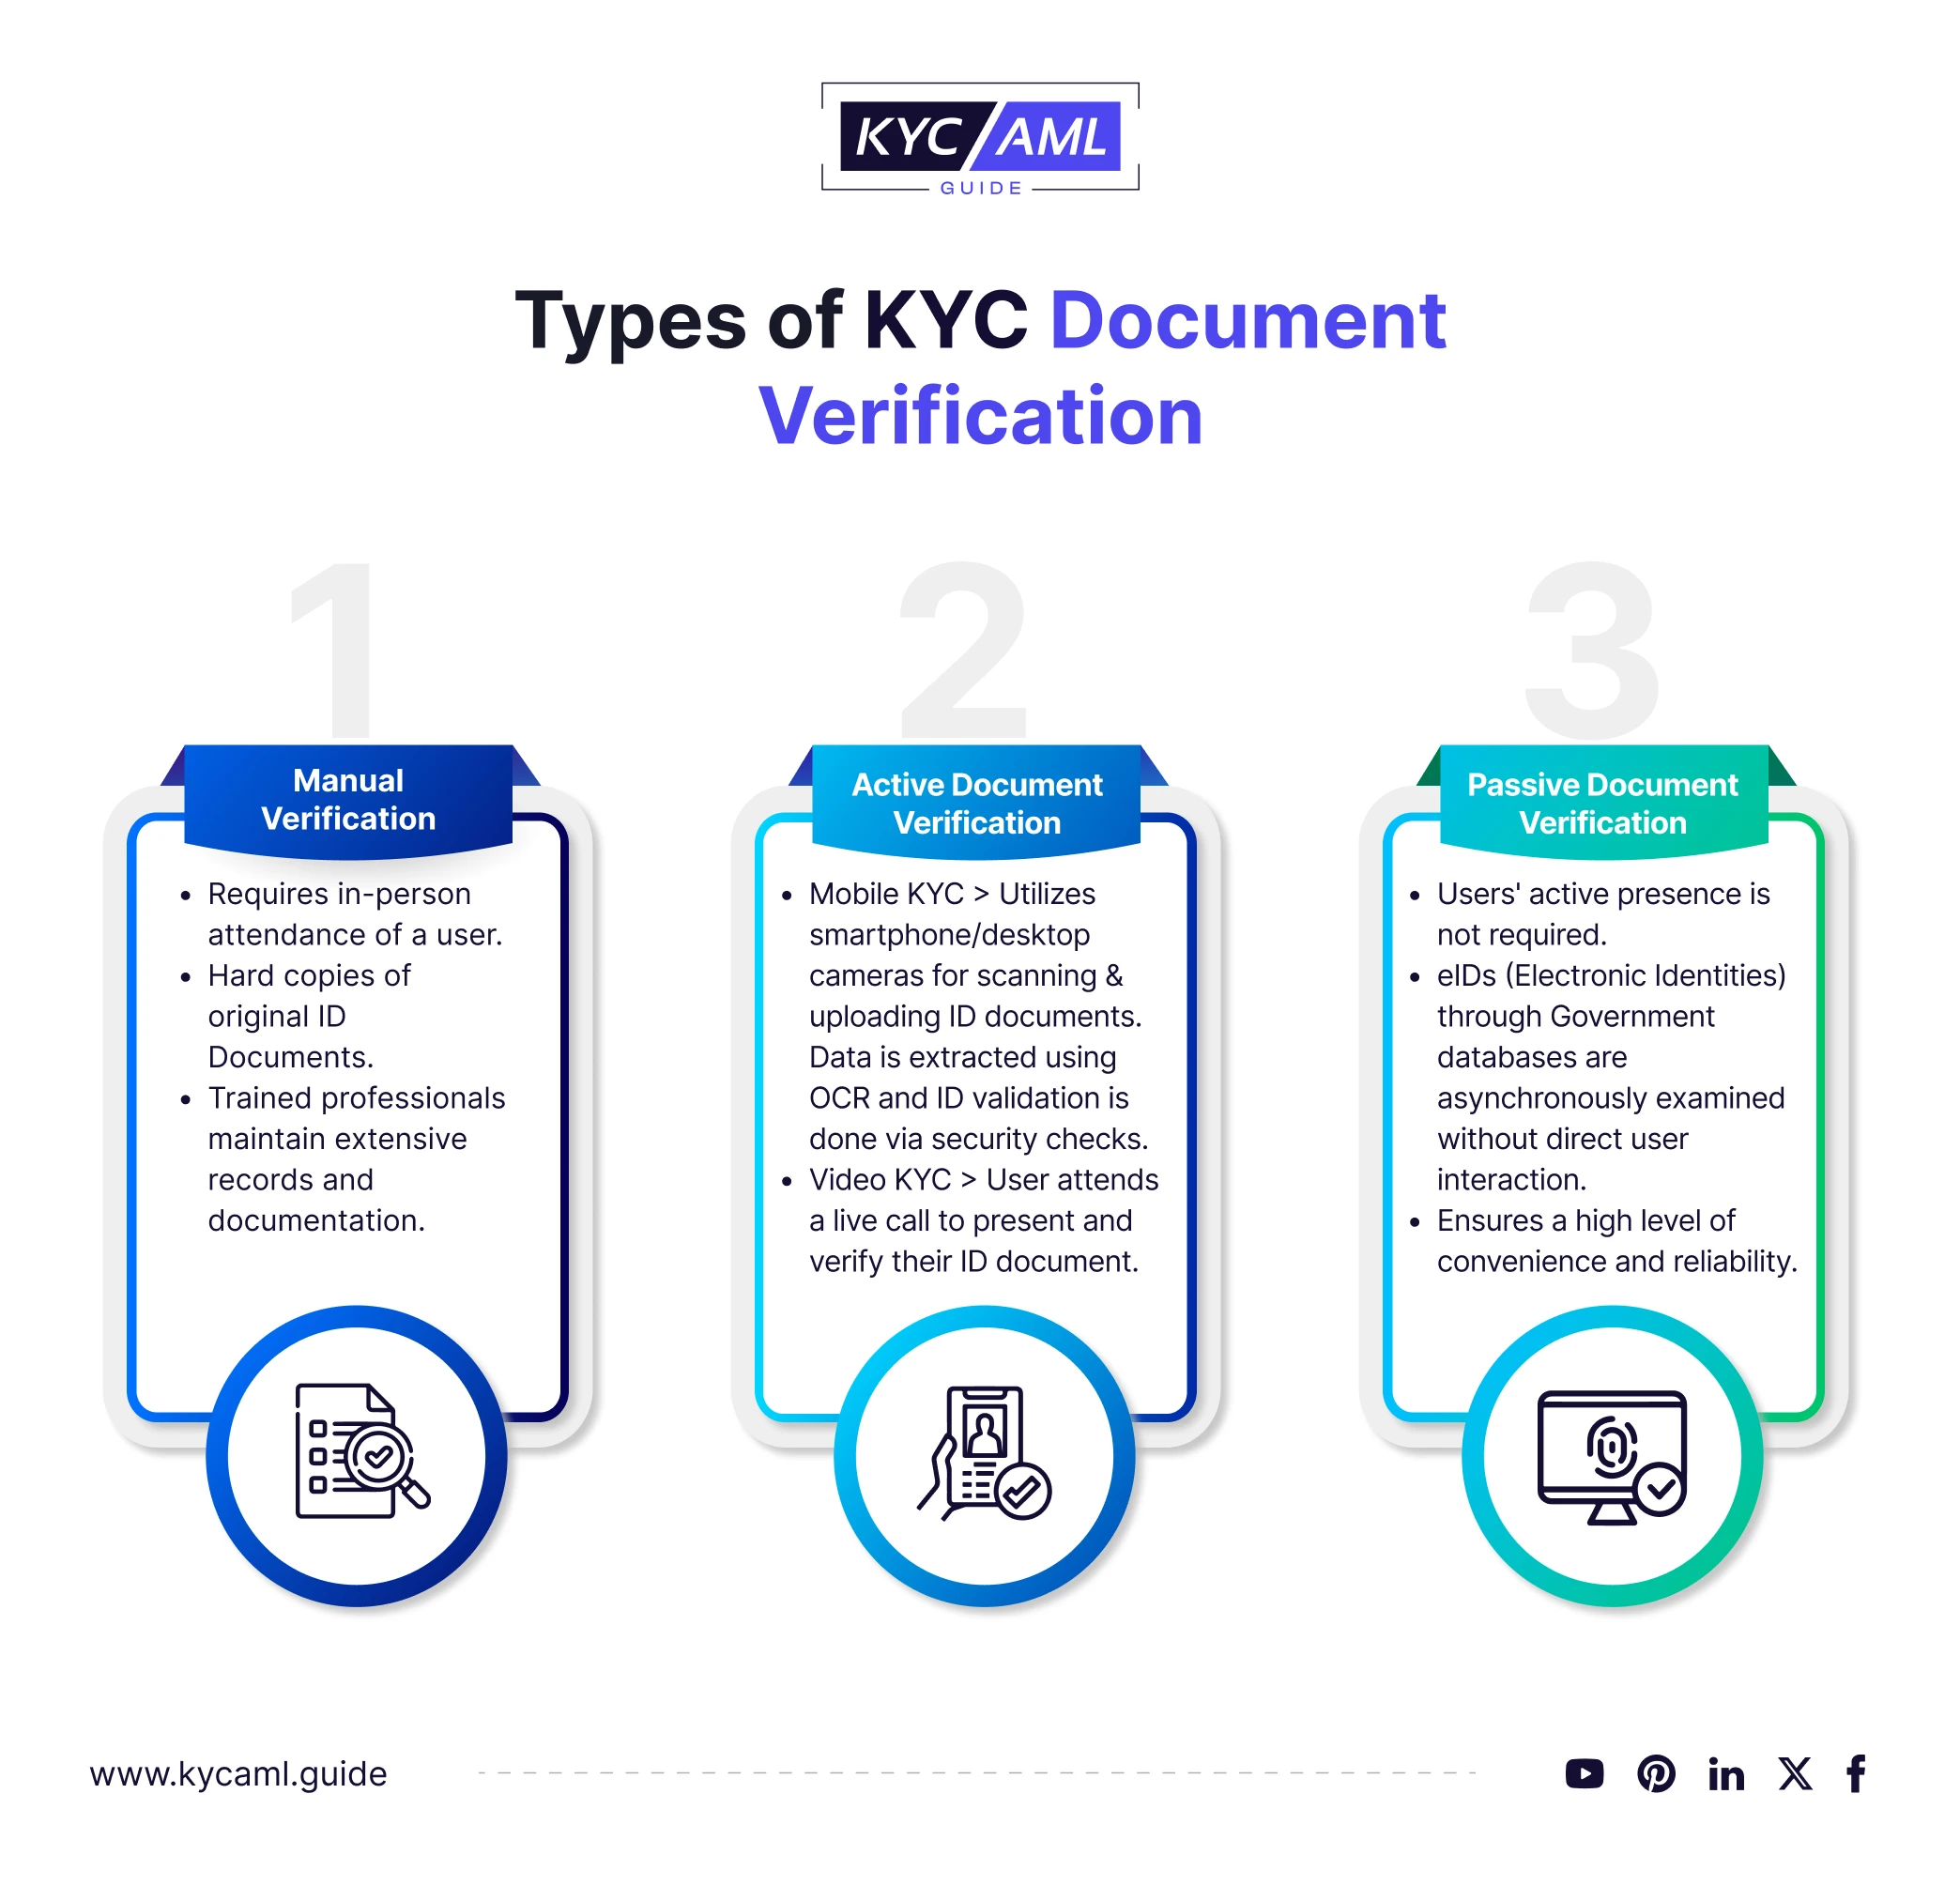 Types of KYC Document Verification